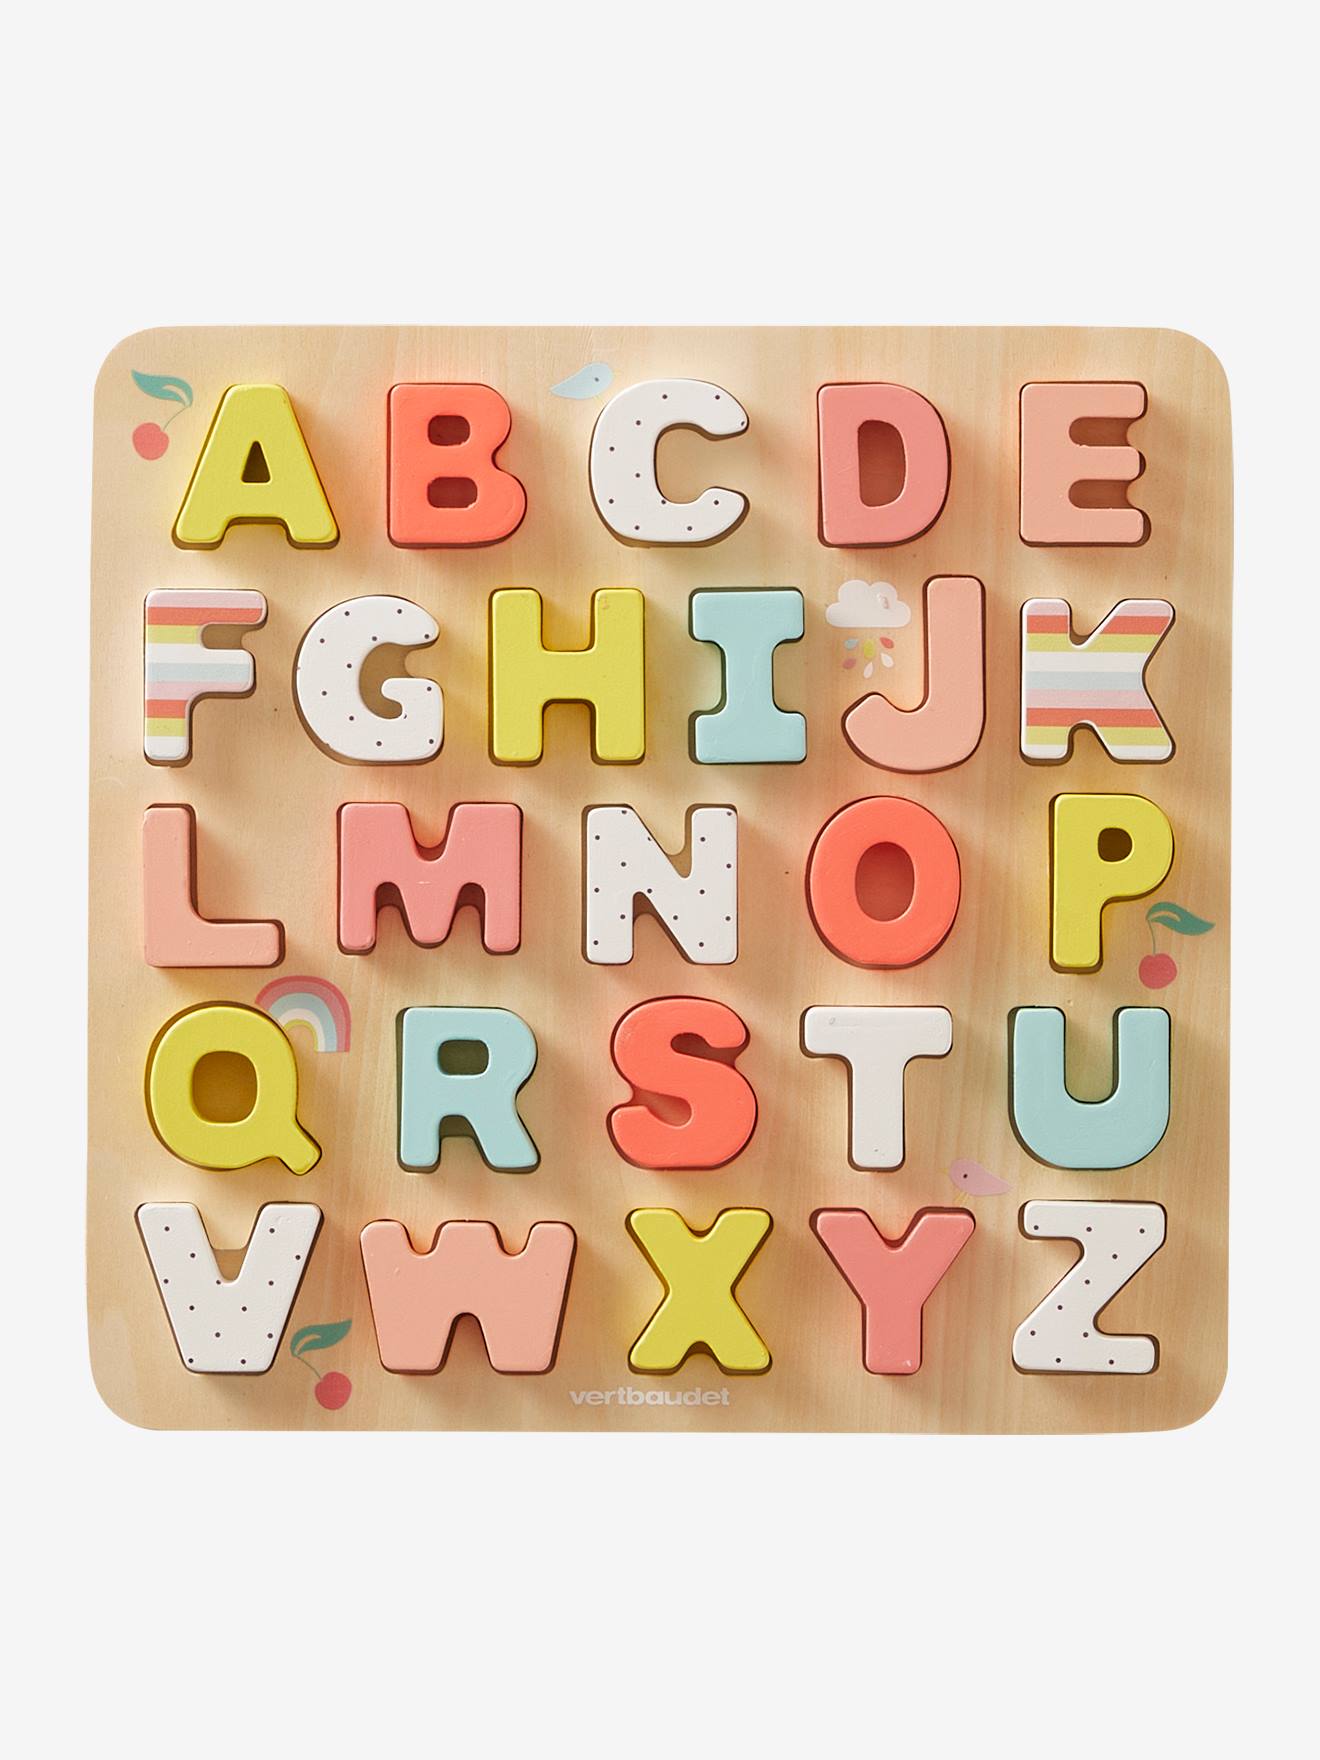 9 Zahlen und A-Z Holz Buchstaben DIY Spielzeug für Kinder Kinder Early Learning TYPE#1 Letters 200 Stück Holz 0 